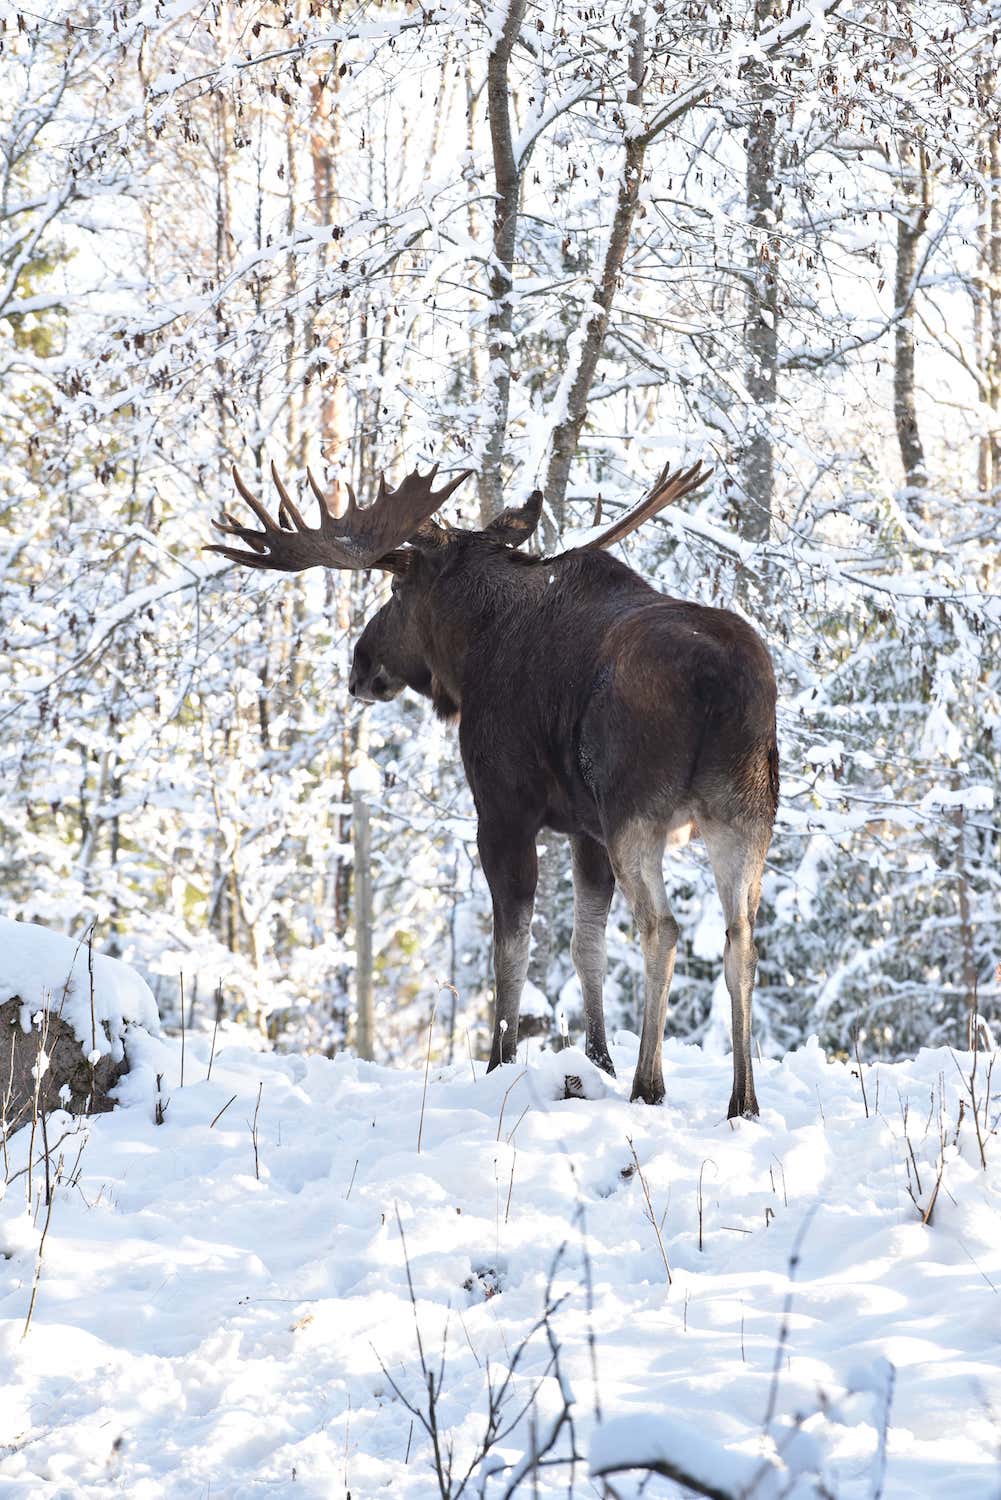 Wild moose in snow in Canada